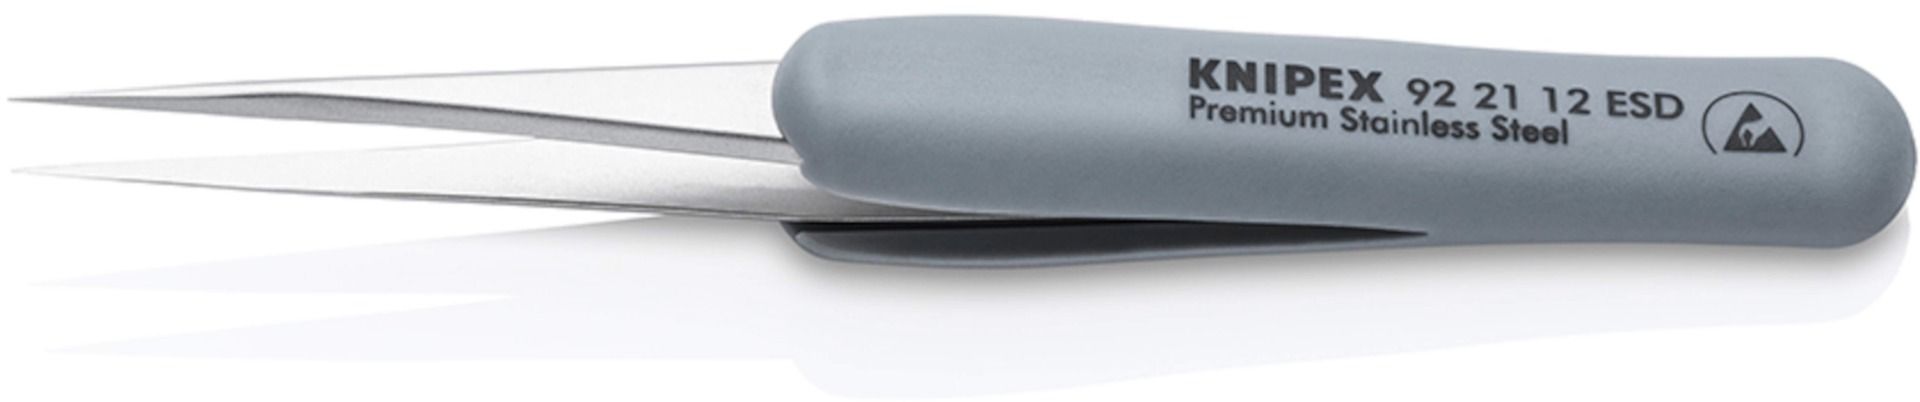 Knipex ESD precizna pinceta sa gumiranim ručkama (92 21 12 ESD)